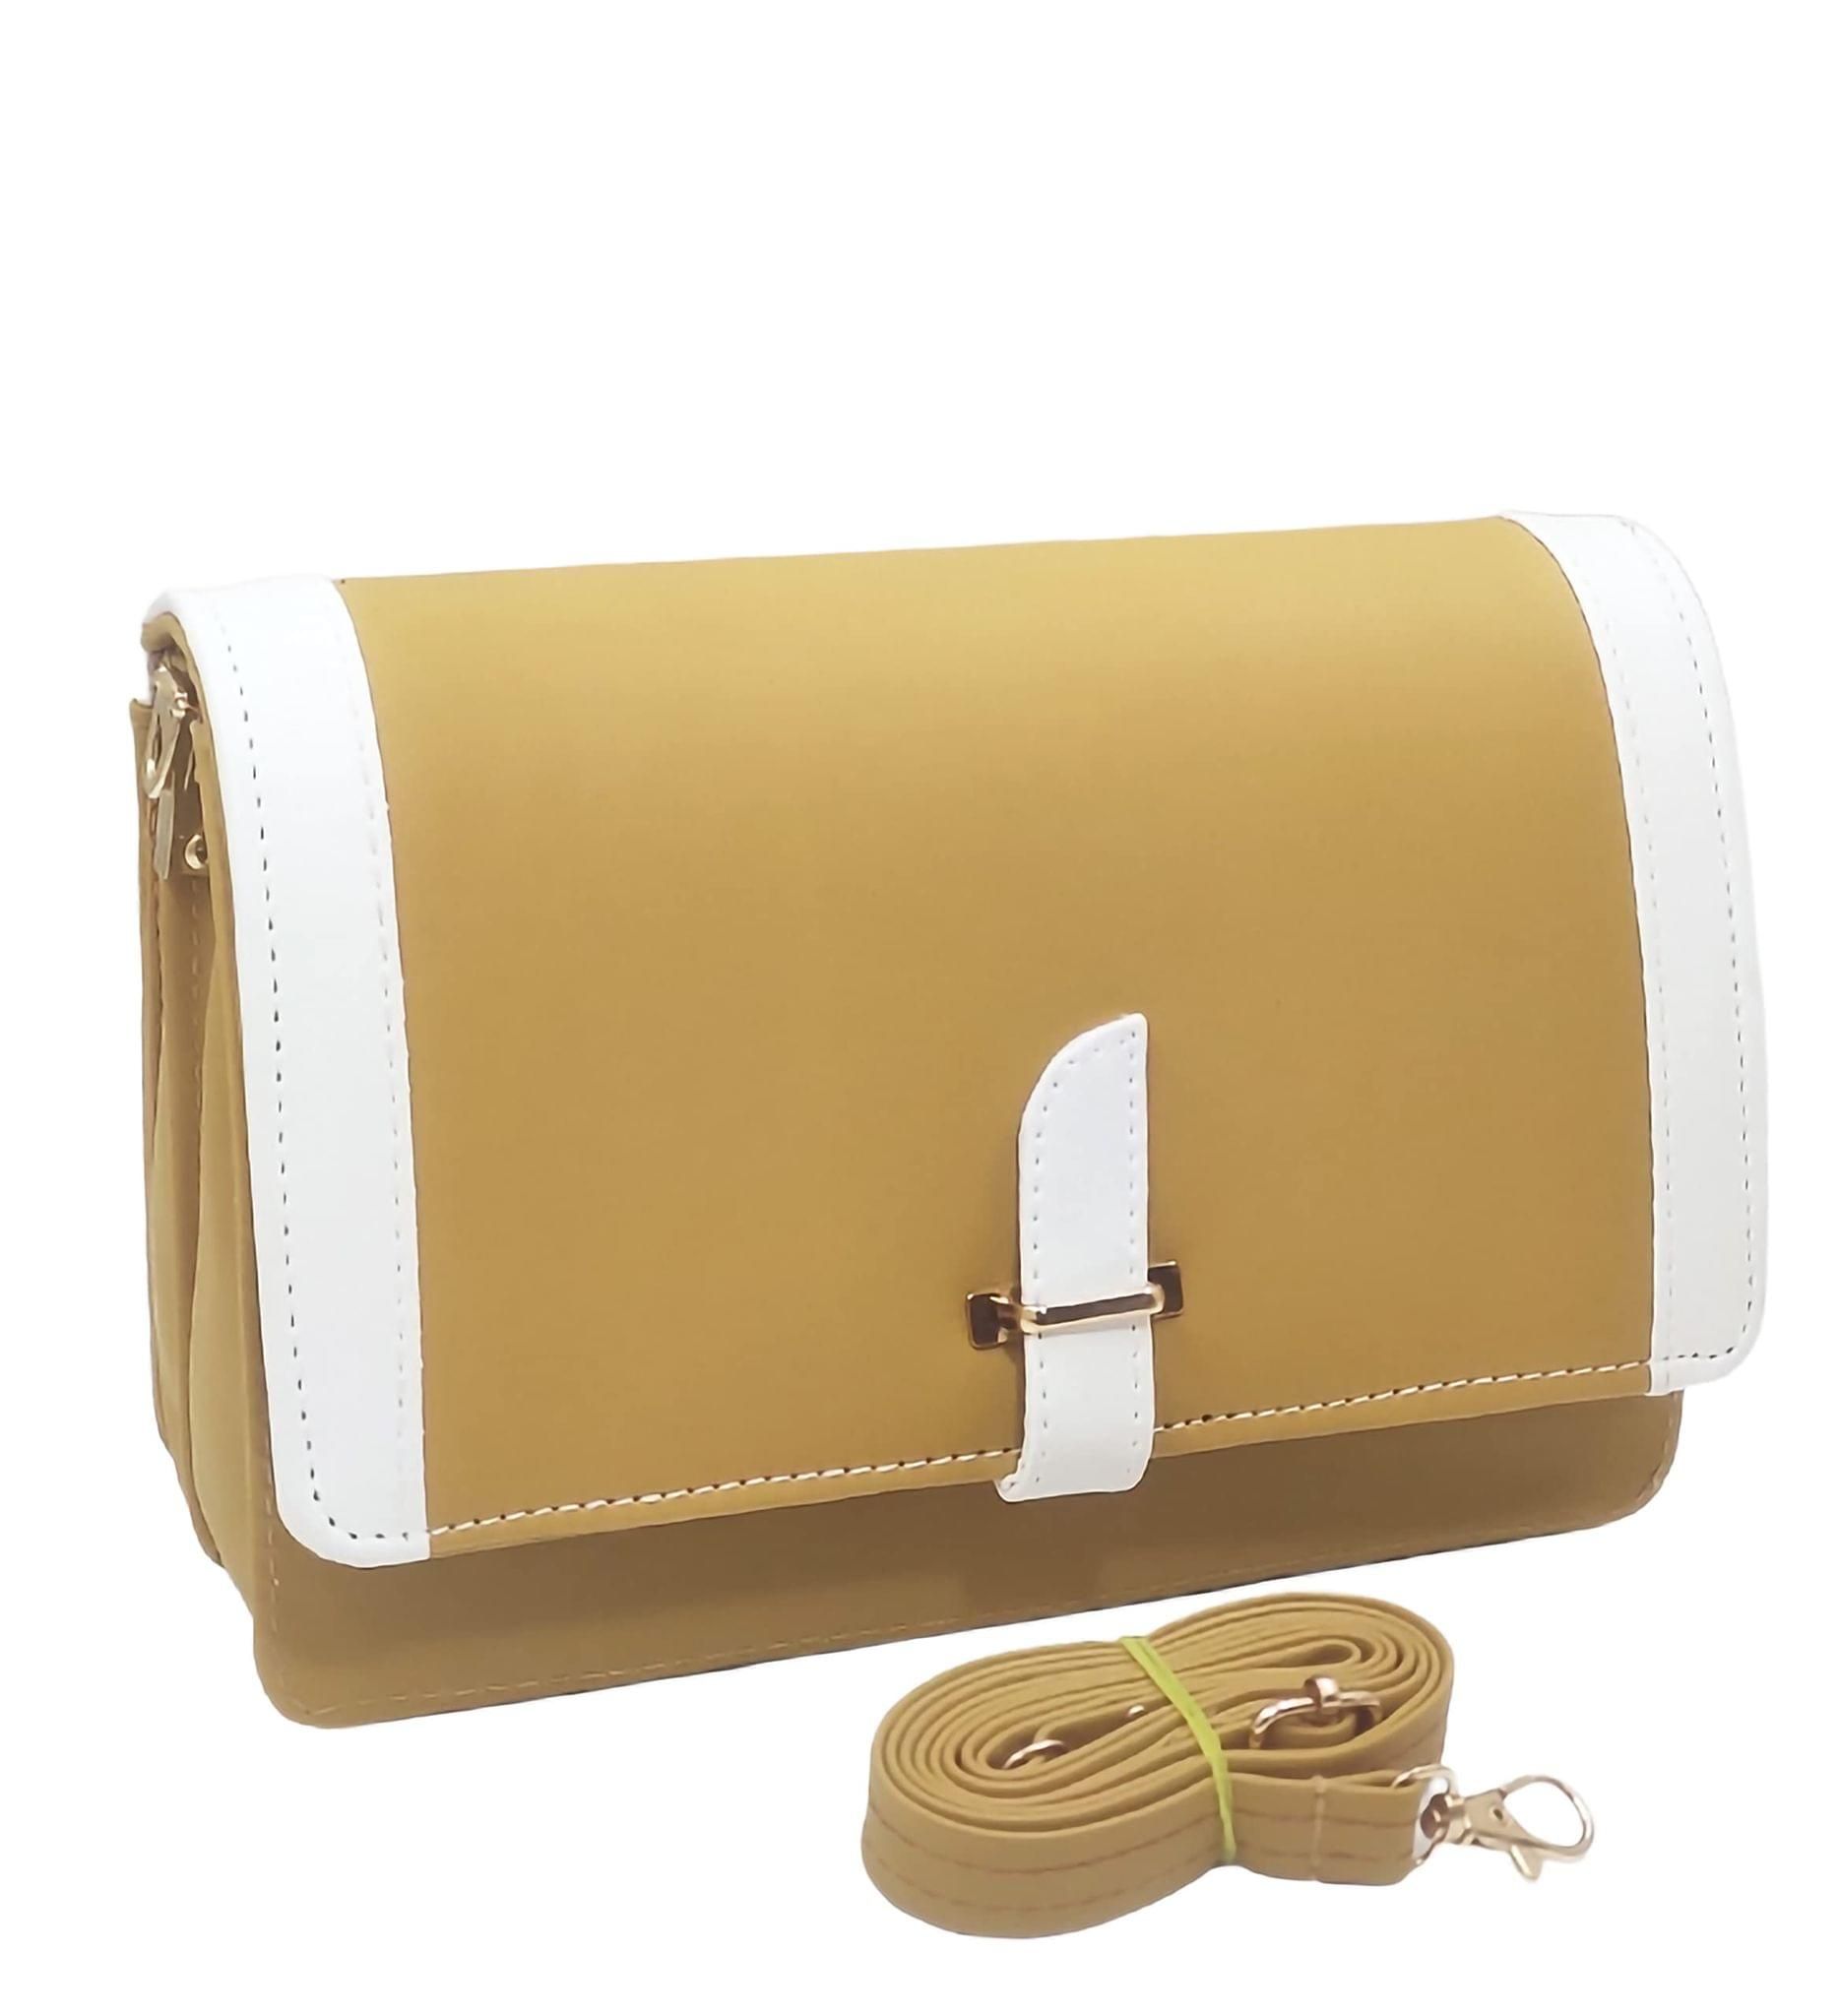 michael kors yellow leather handbag handbag outlet canada - Marwood  VeneerMarwood Veneer